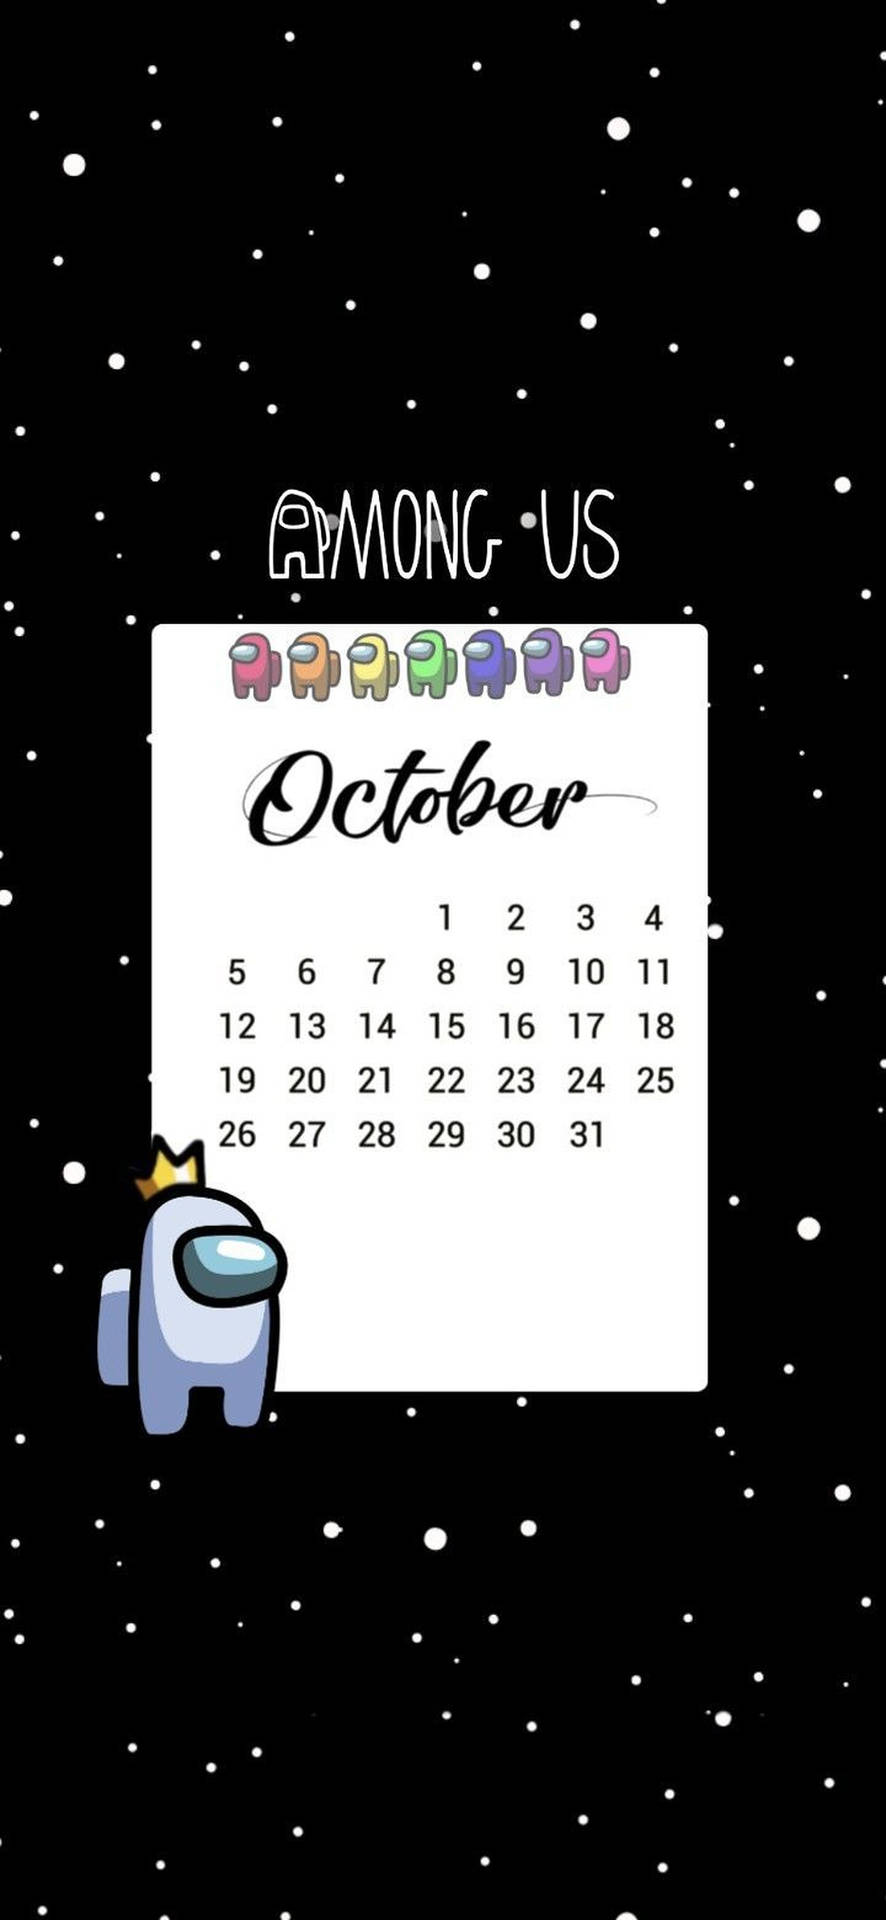 Among Us Space October Calendar